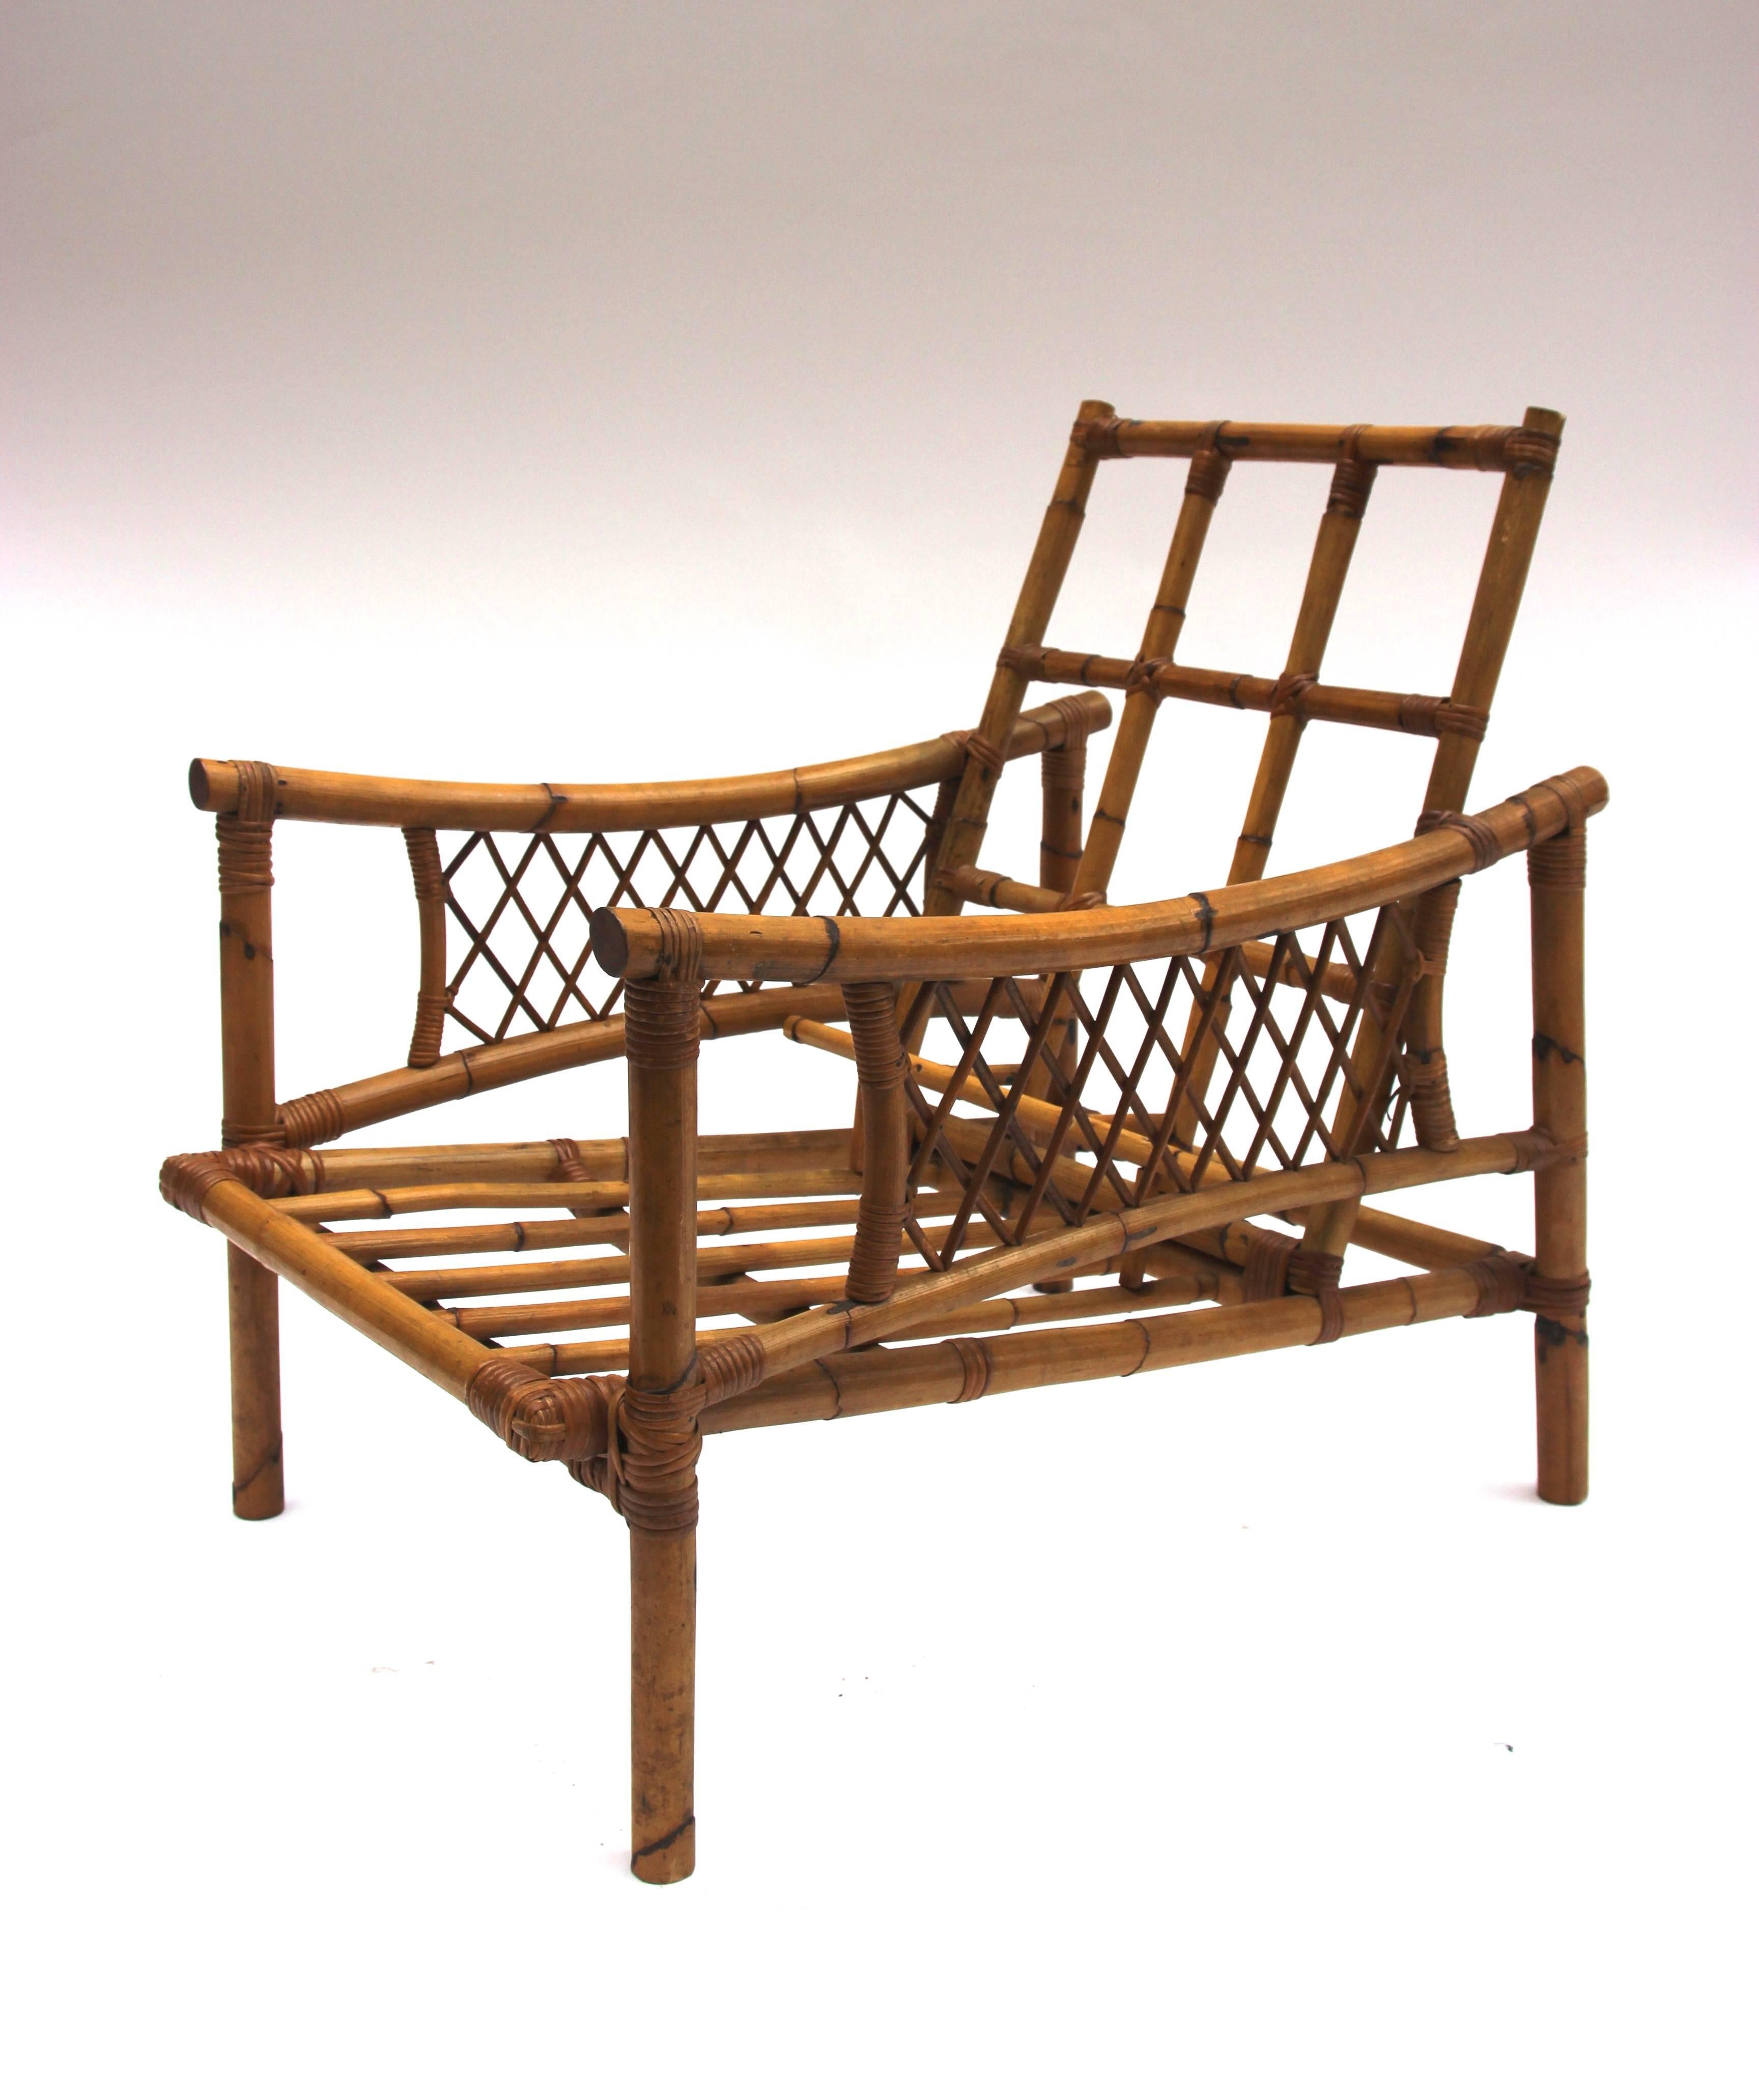 Pair armchairs,
Bamboo,
circa 1970, France.
Height: 76 cm, width 56 cm, depth: 80 cm,
Seat height: 28 cm.